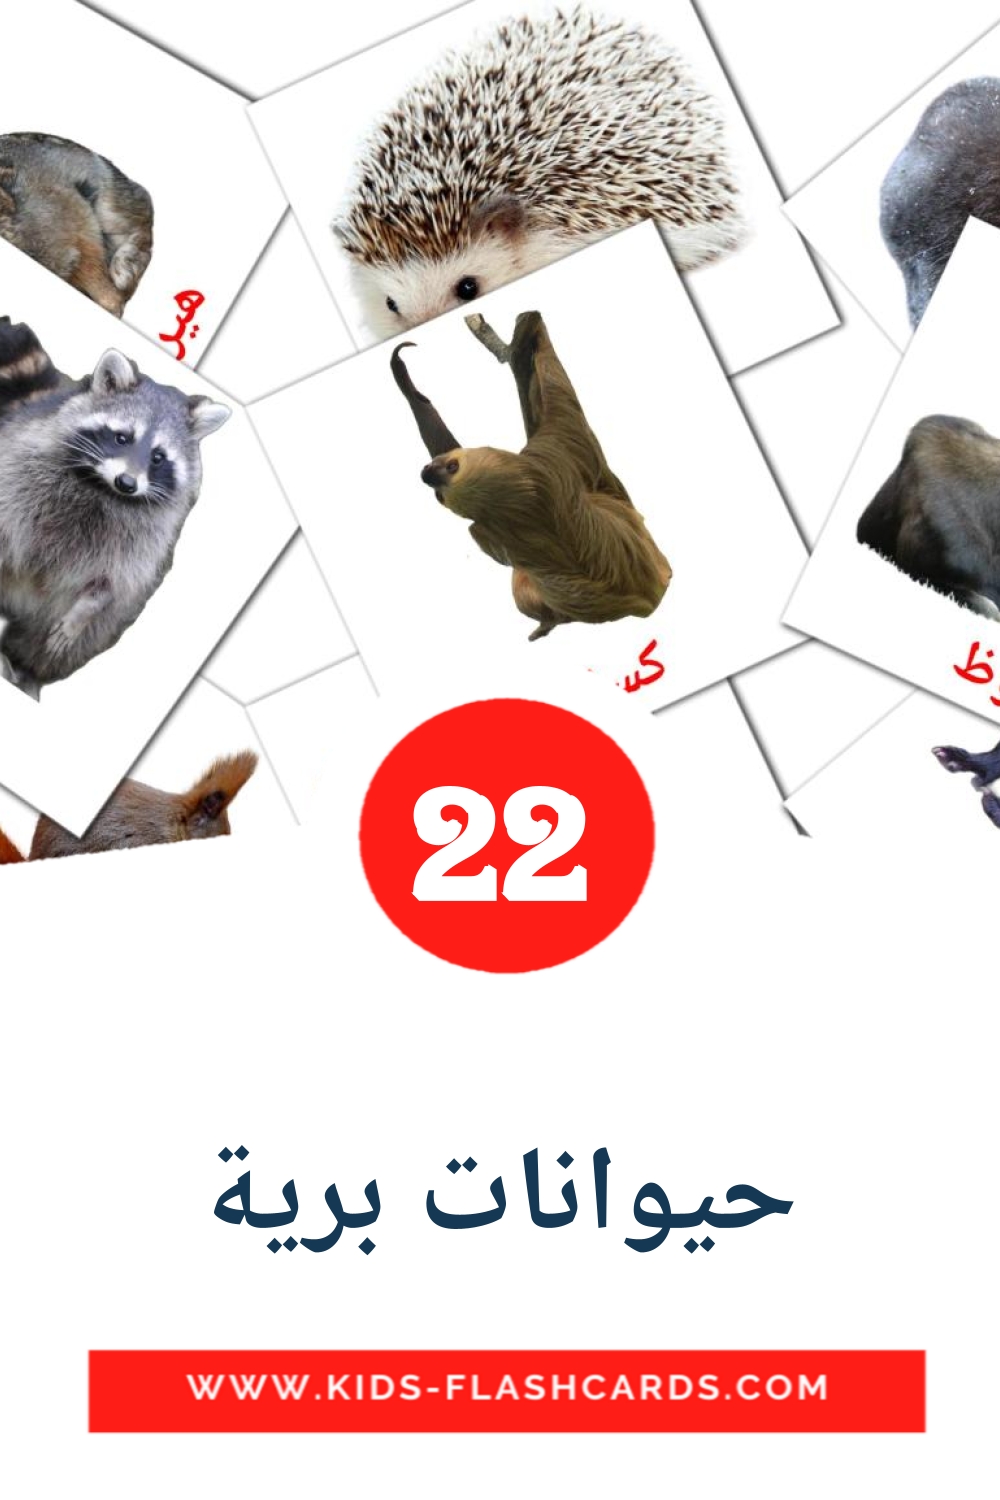 22 حيوانات برية Picture Cards for Kindergarden in arabic